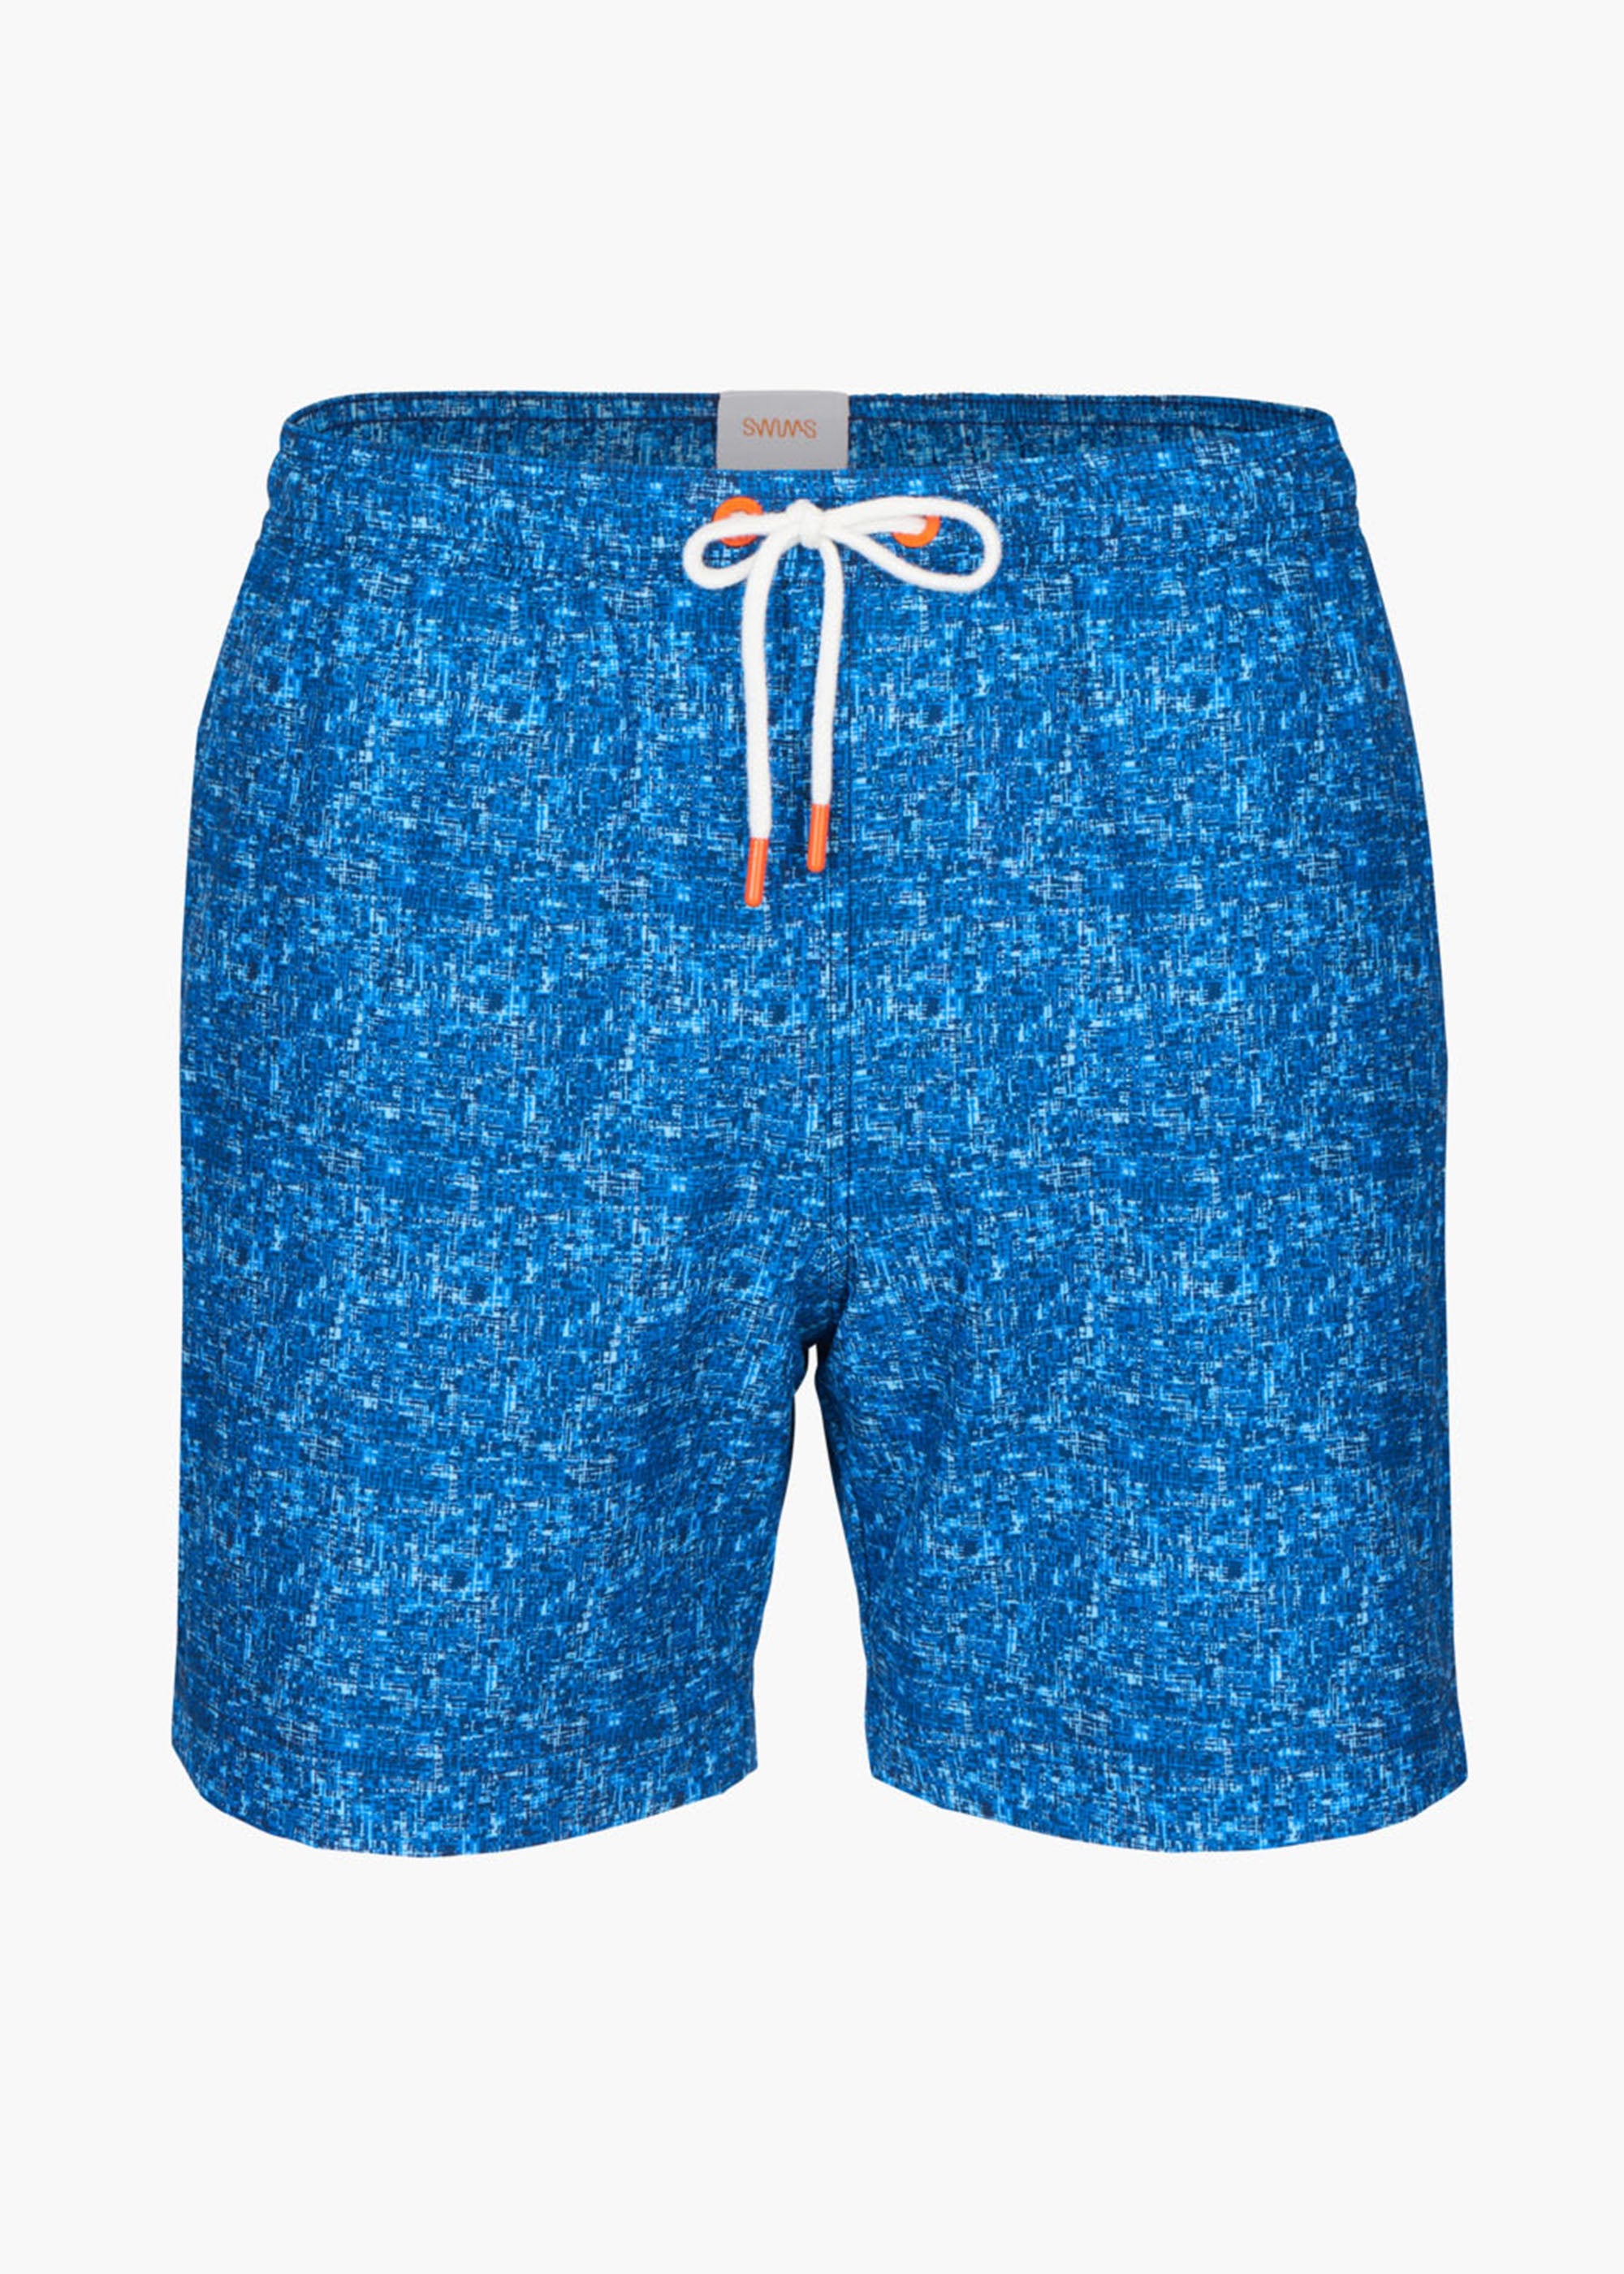 Sol Swim Short (6 ½” inseam) - background::white,variant::Ponza Ensign Blue